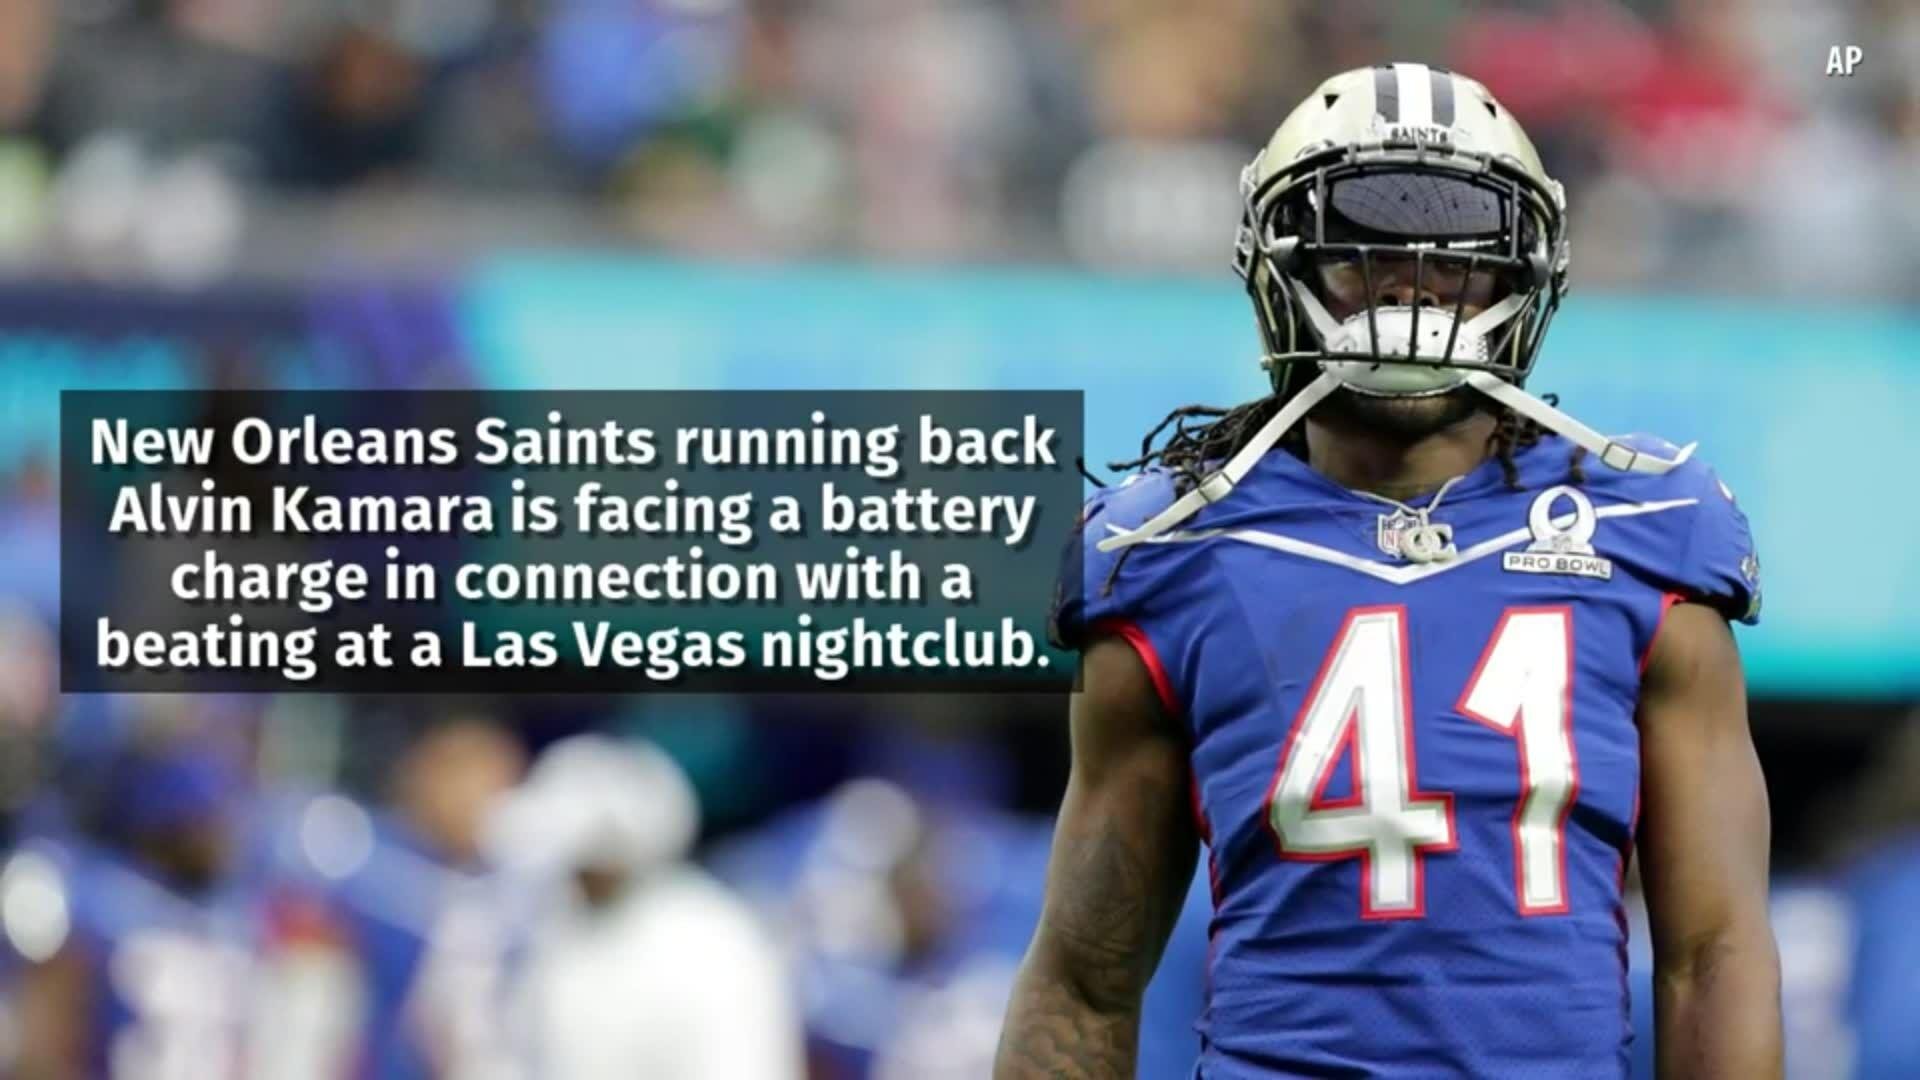 New Orleans Saints' Alvin Kamara arrested on battery charge after Pro Bowl, Trending